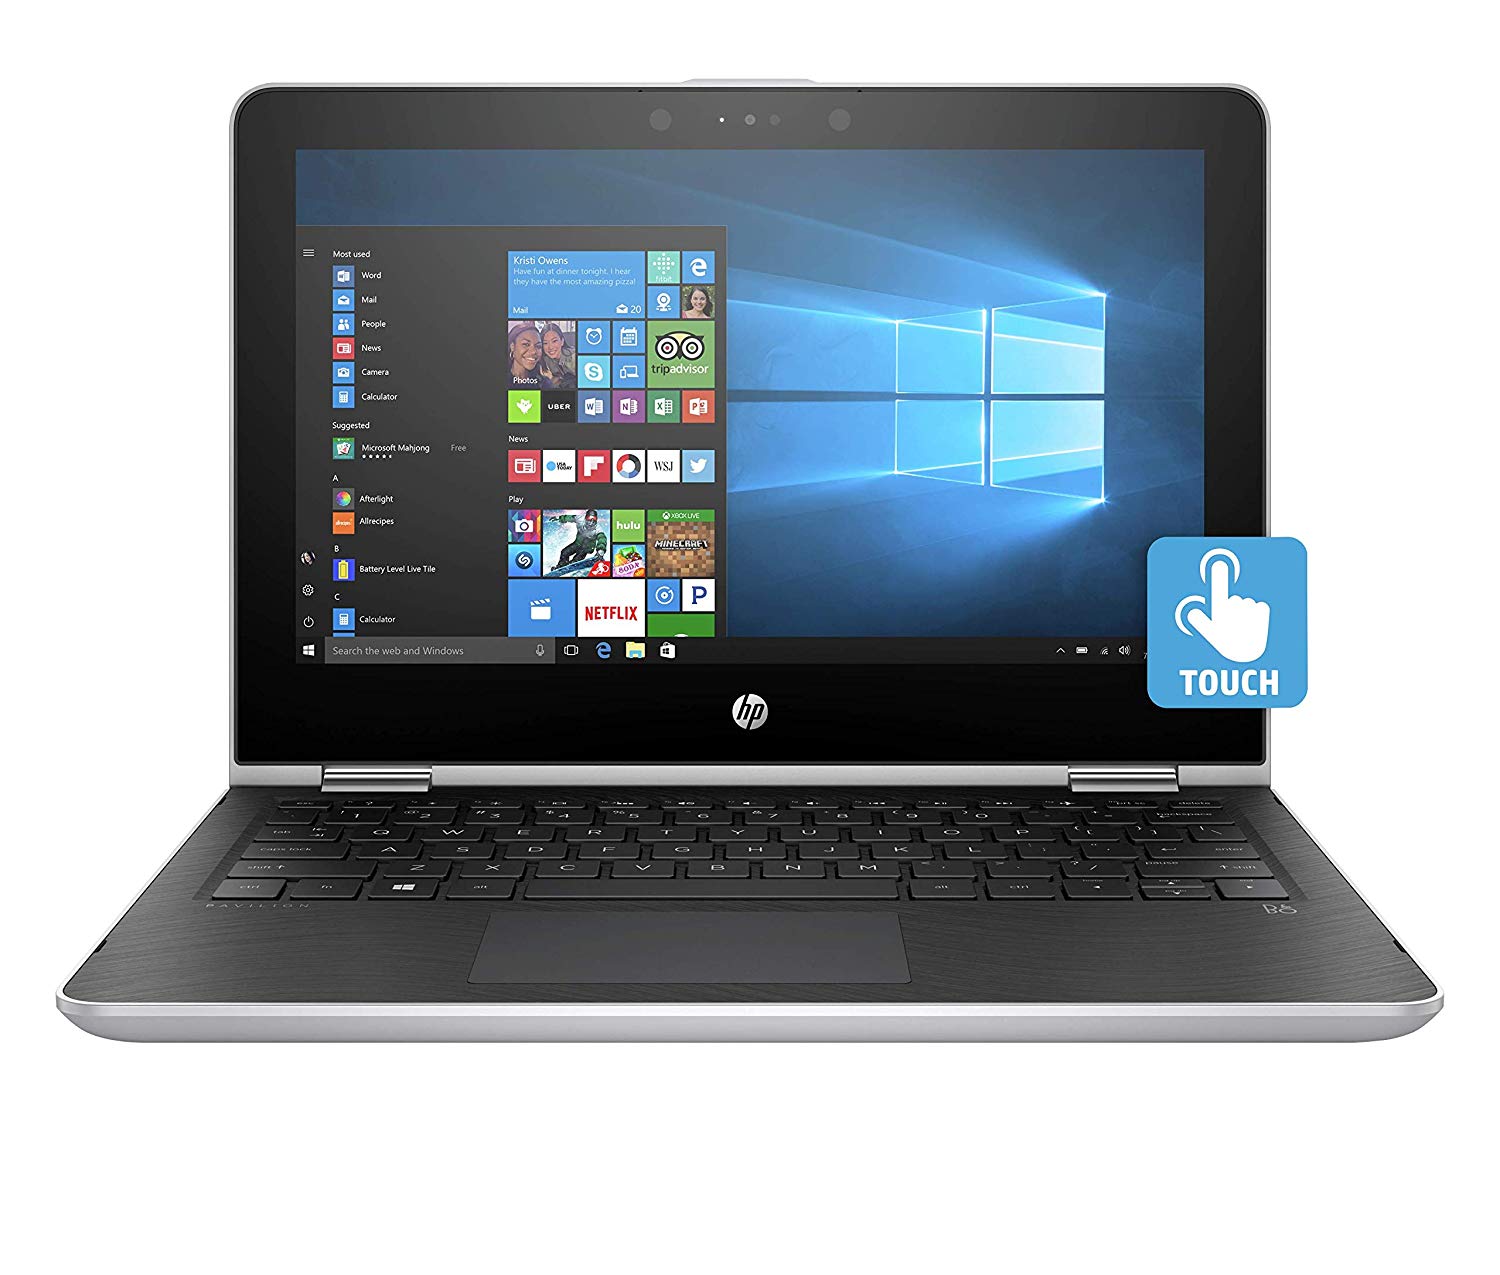 HP Pavilion x360 11-ad106tu 11.6-inch HD Laptop (8th Gen Intel i3-8130U/4GB DDR4/1TB HDD/Win10/No DVD/Intel UHD Graphics 605), Natural Silver